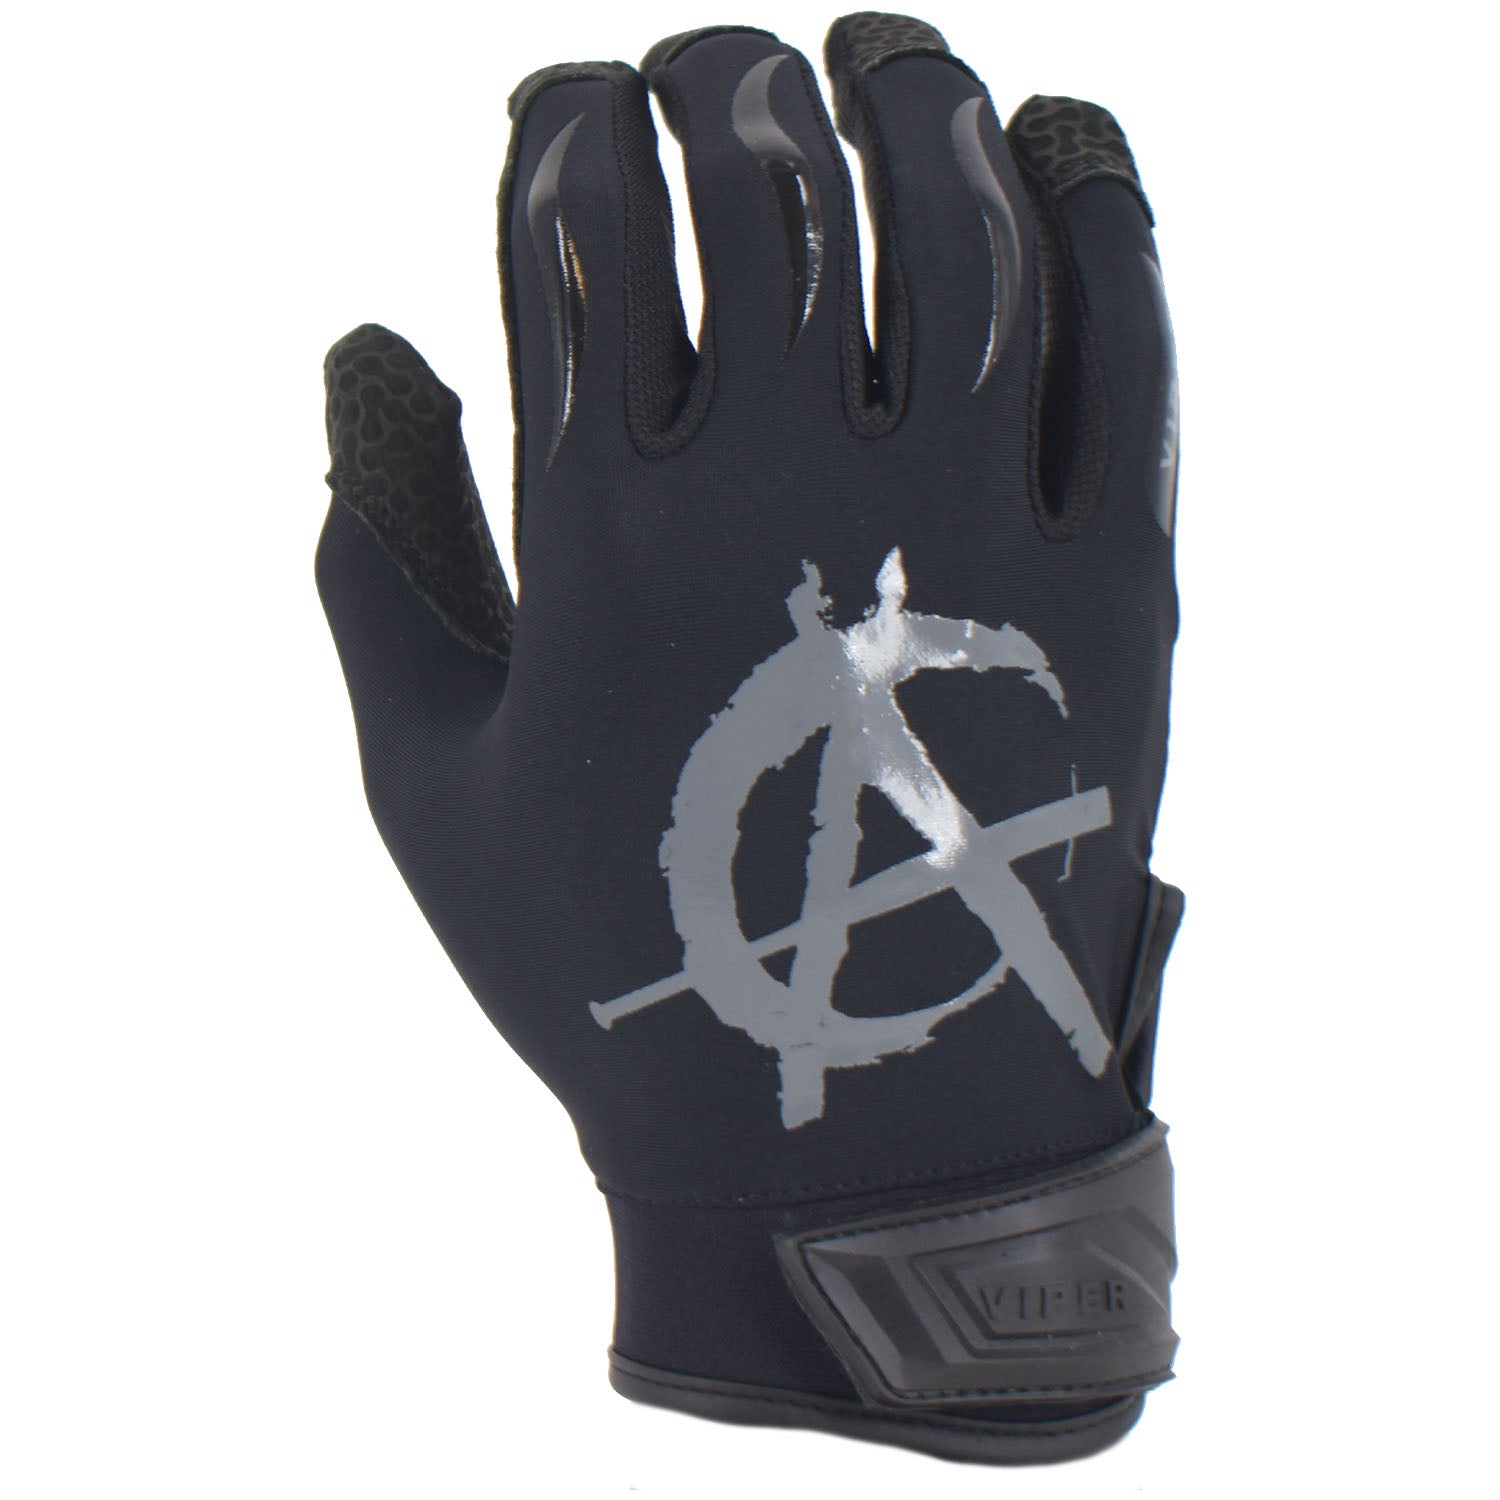 Viper Lite Premium Batting Gloves Leather Palm - Anarchy Edition Black/Charcoal - Smash It Sports